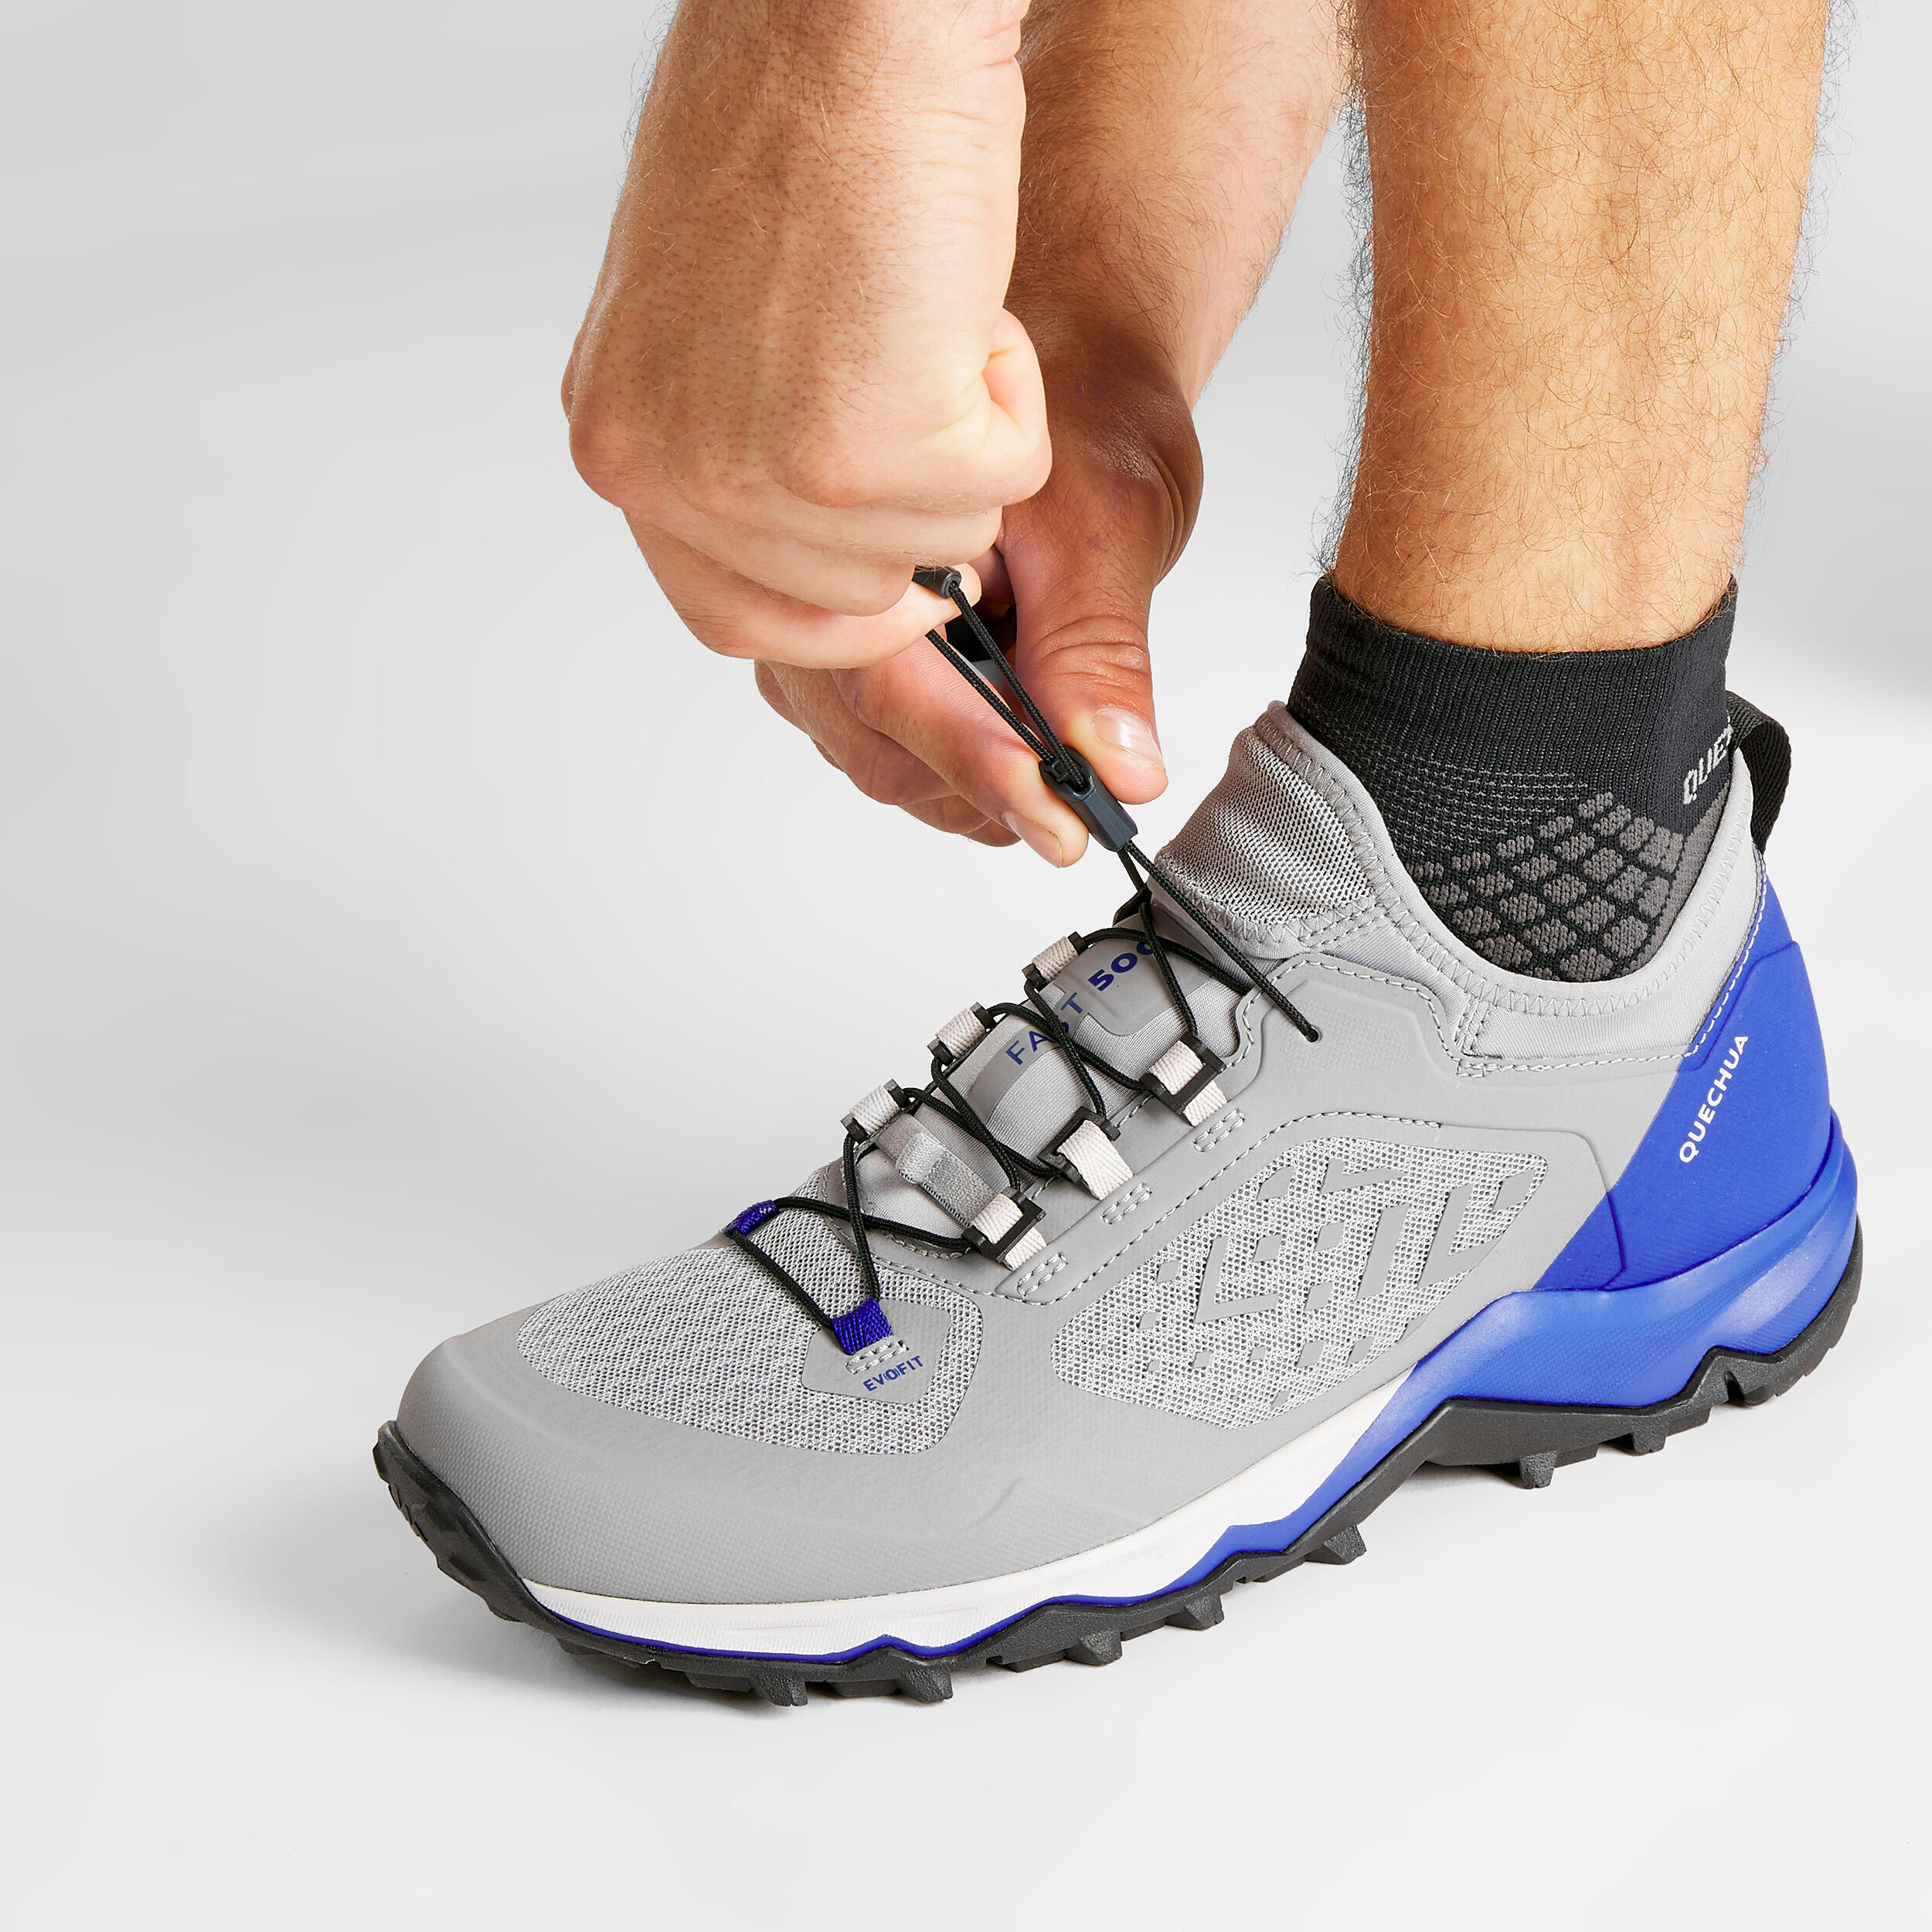 Men’s Fast Hiking Ultra Lightweight Boots - FH500 5/7